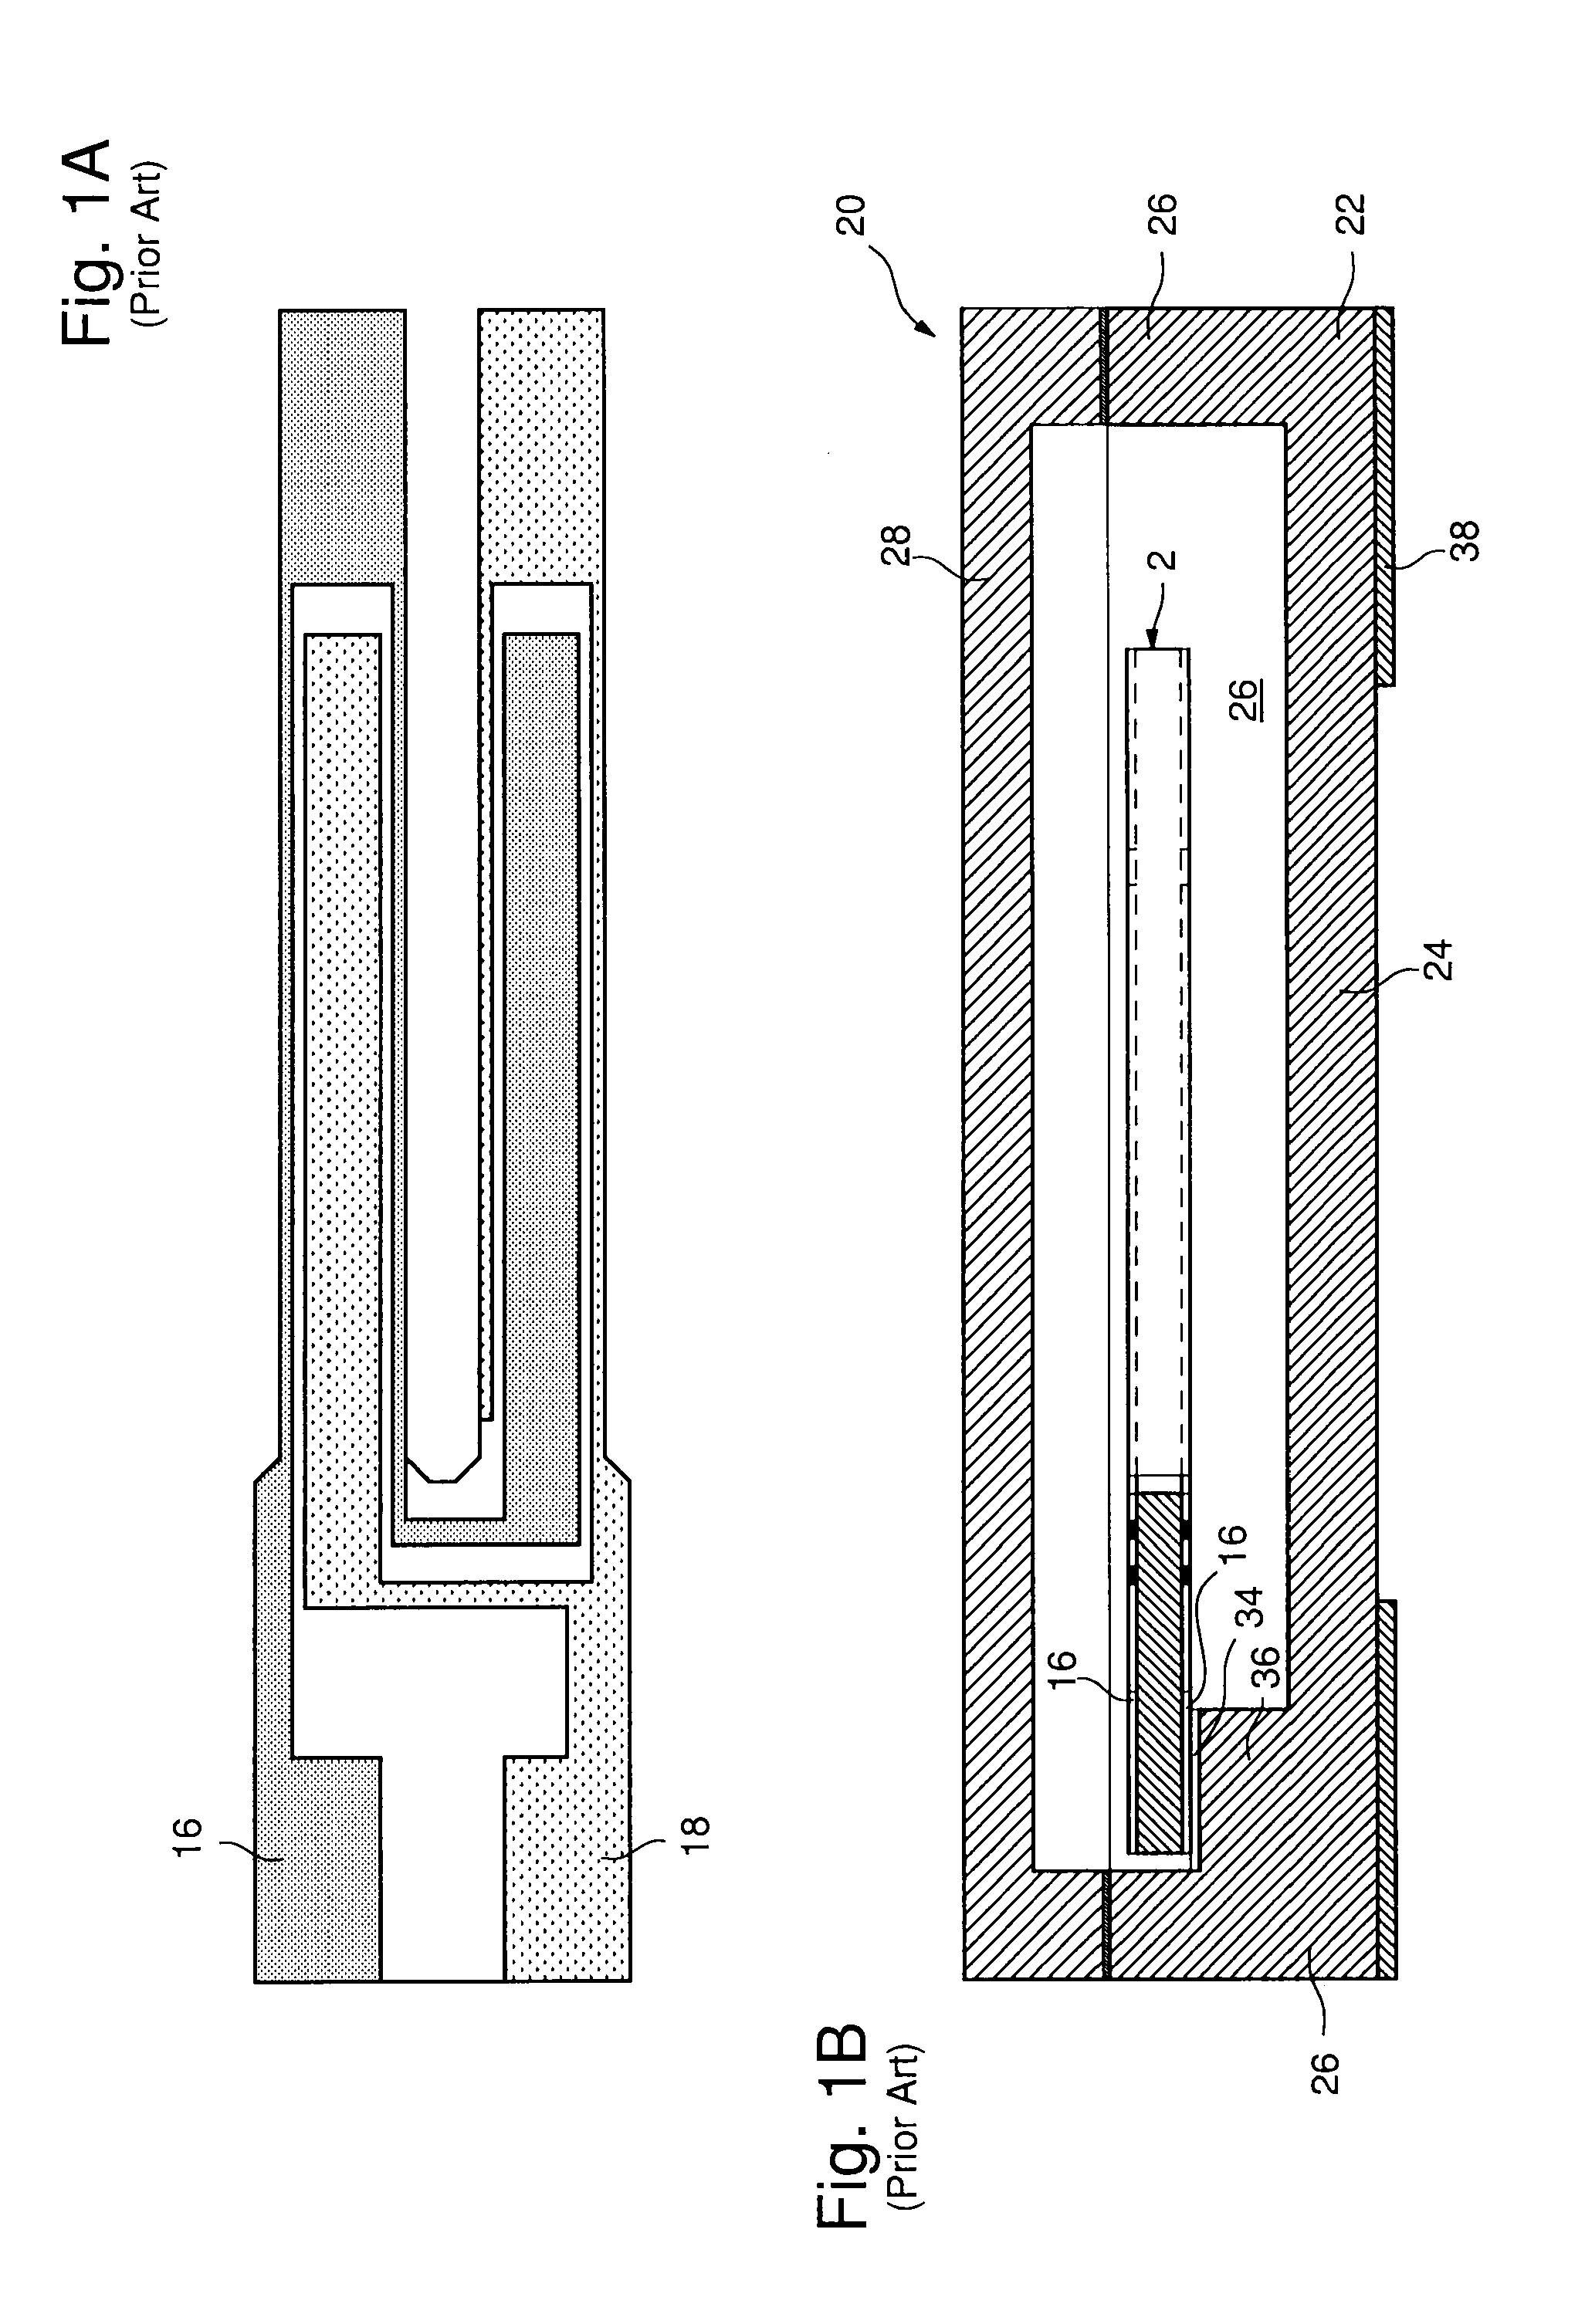 Method for mounting a piezoelectric resonator in a case and packaged piezoelectric resonator